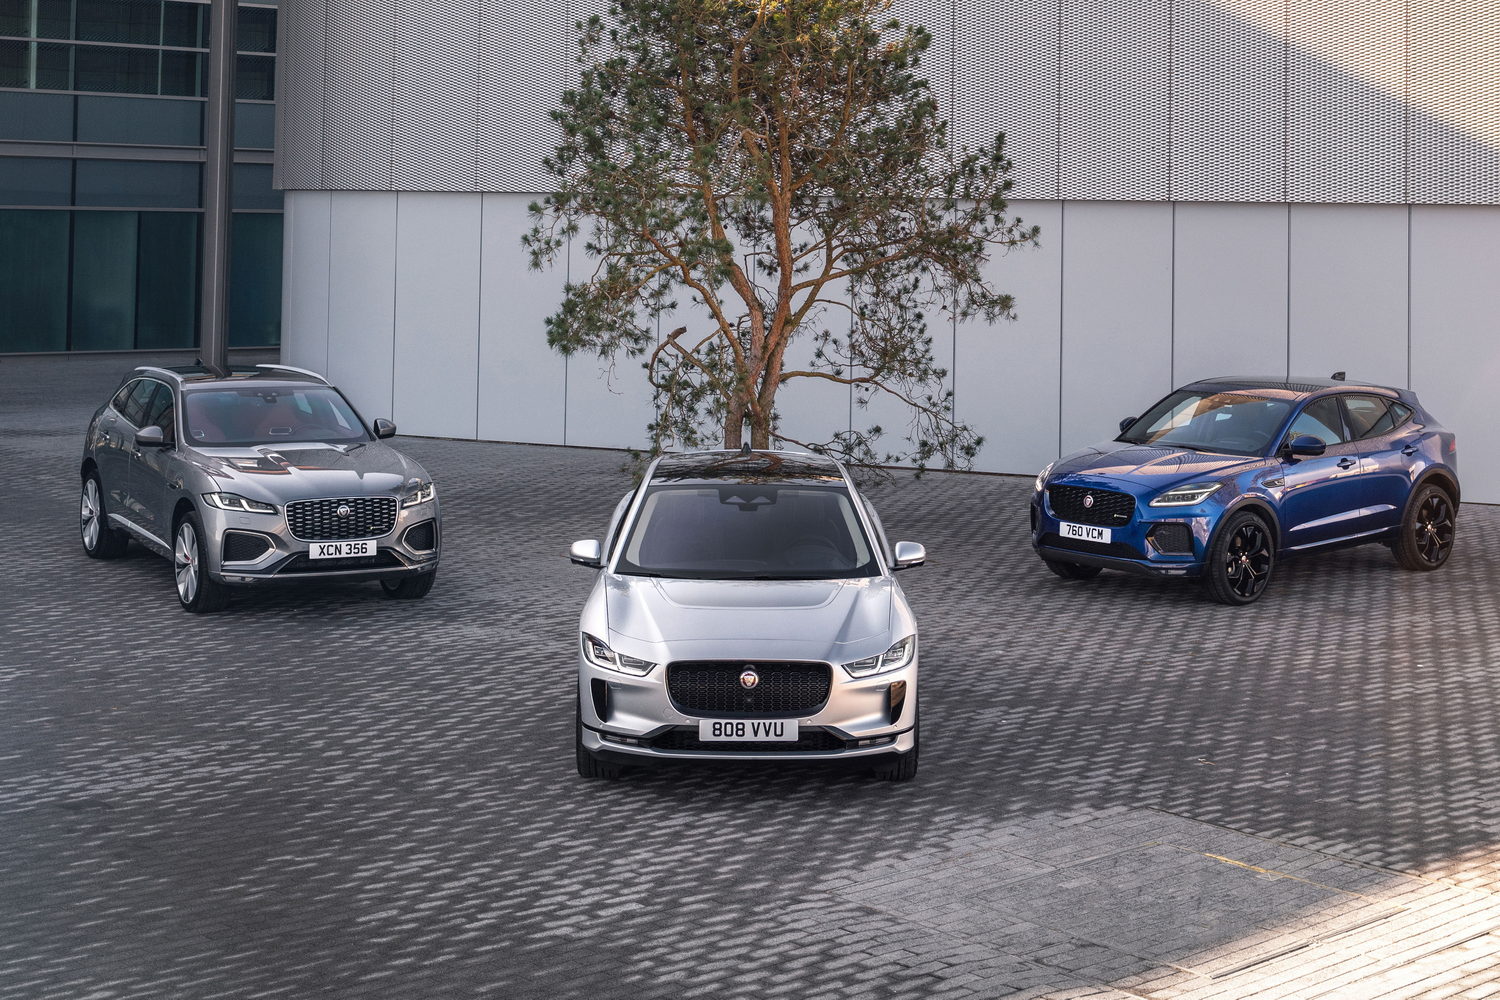 Car News | Jaguar Ireland now offers a five-year warranty